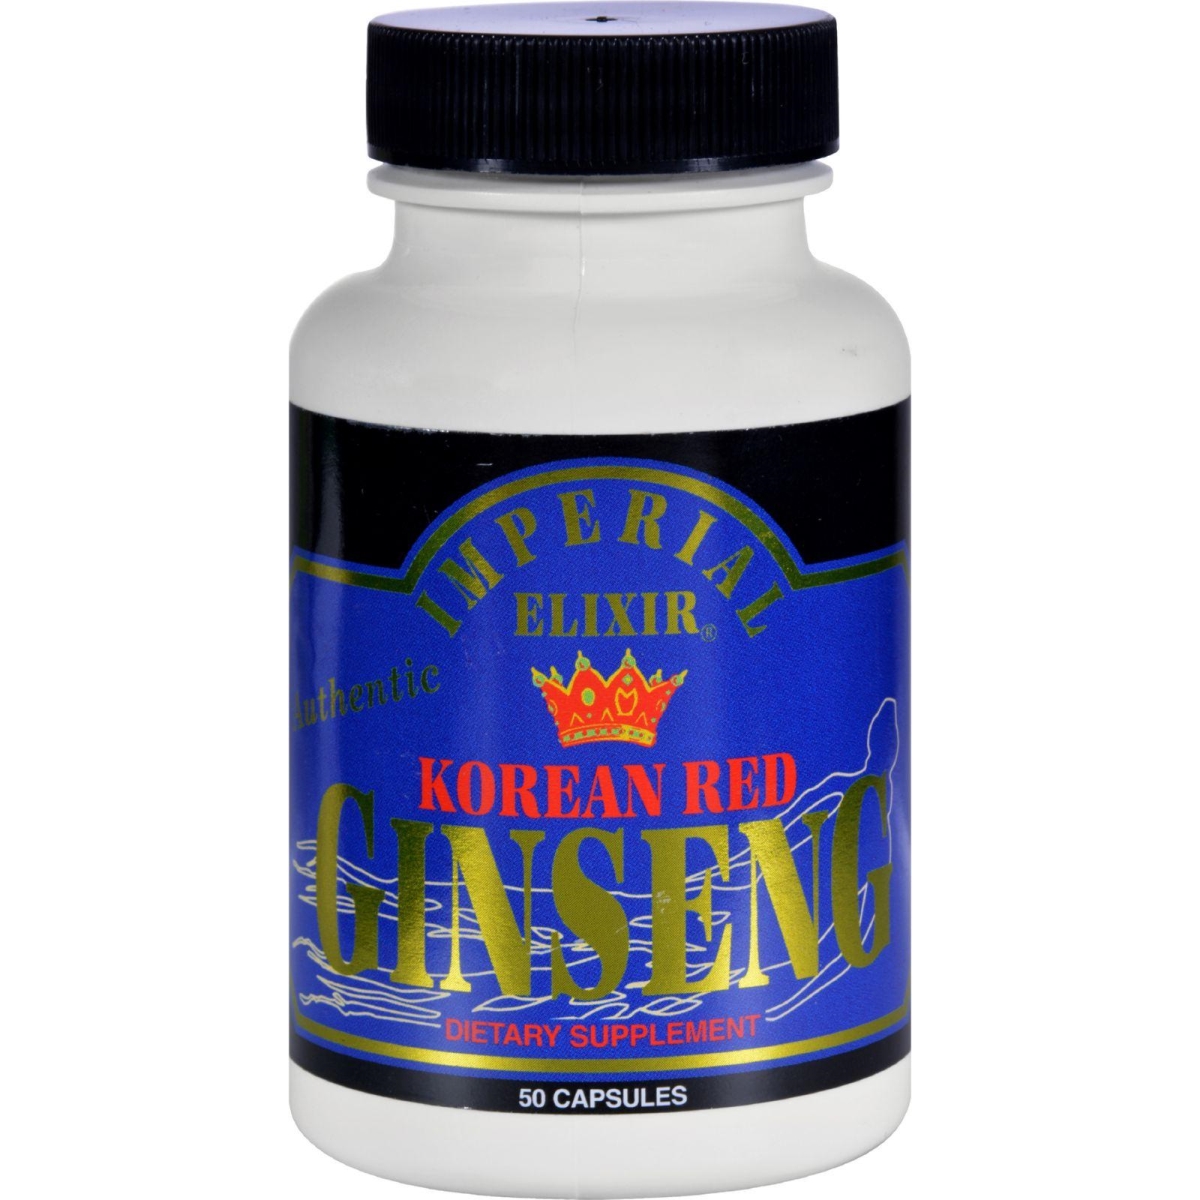 Hg0405381 Ginseng Korean Red - 50 Capsules